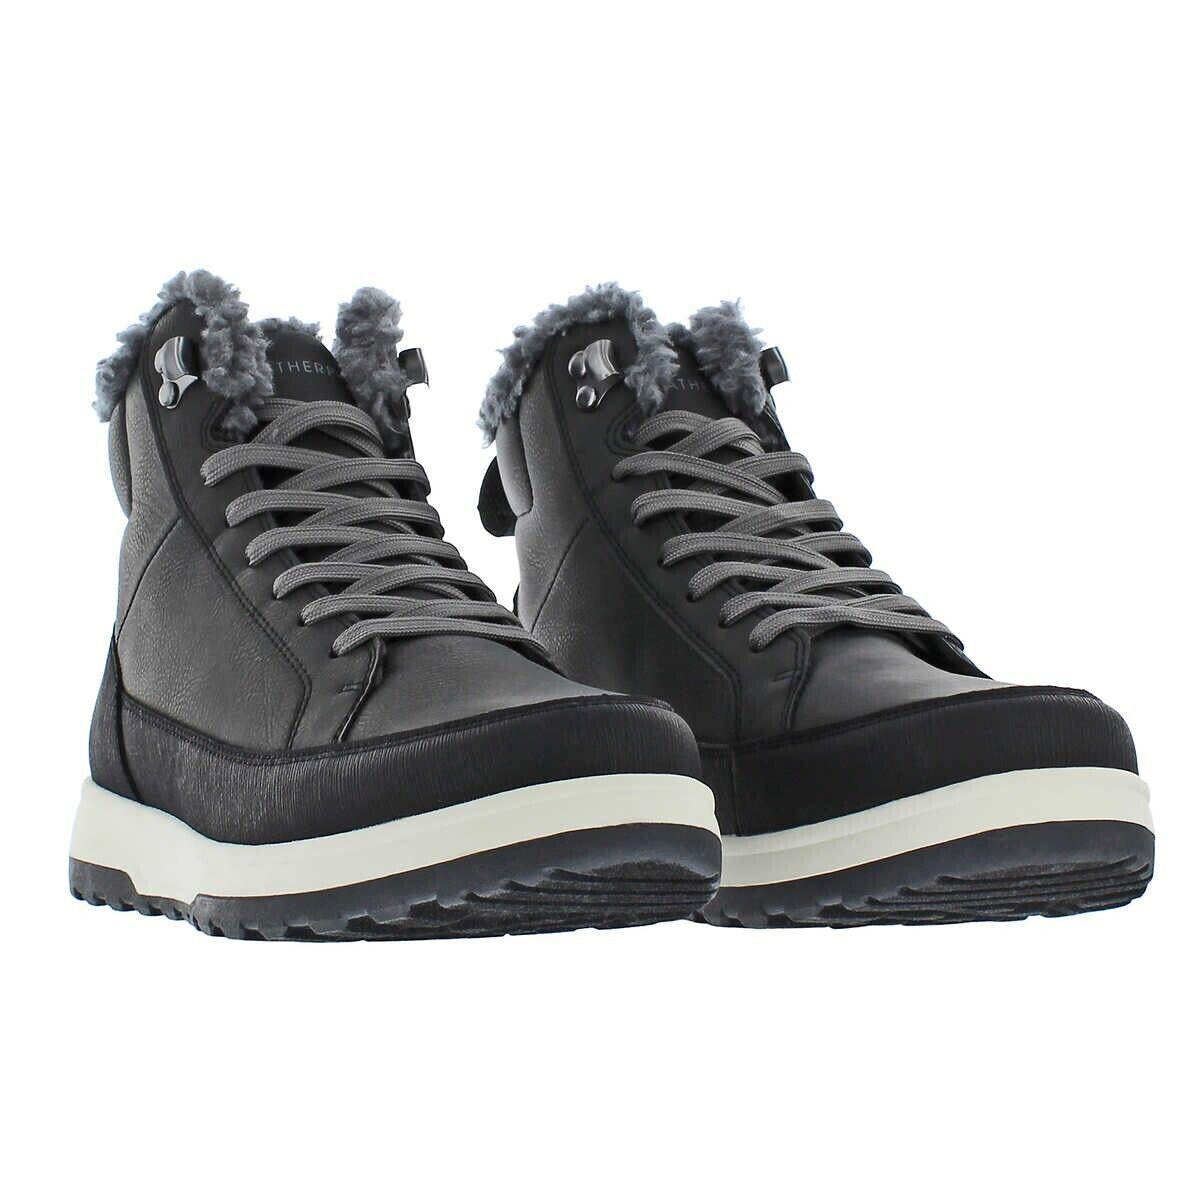 Primary image for Weatherproof Men's Logjam Size 8, Lace-Up Sneaker Boot, Dark Gray